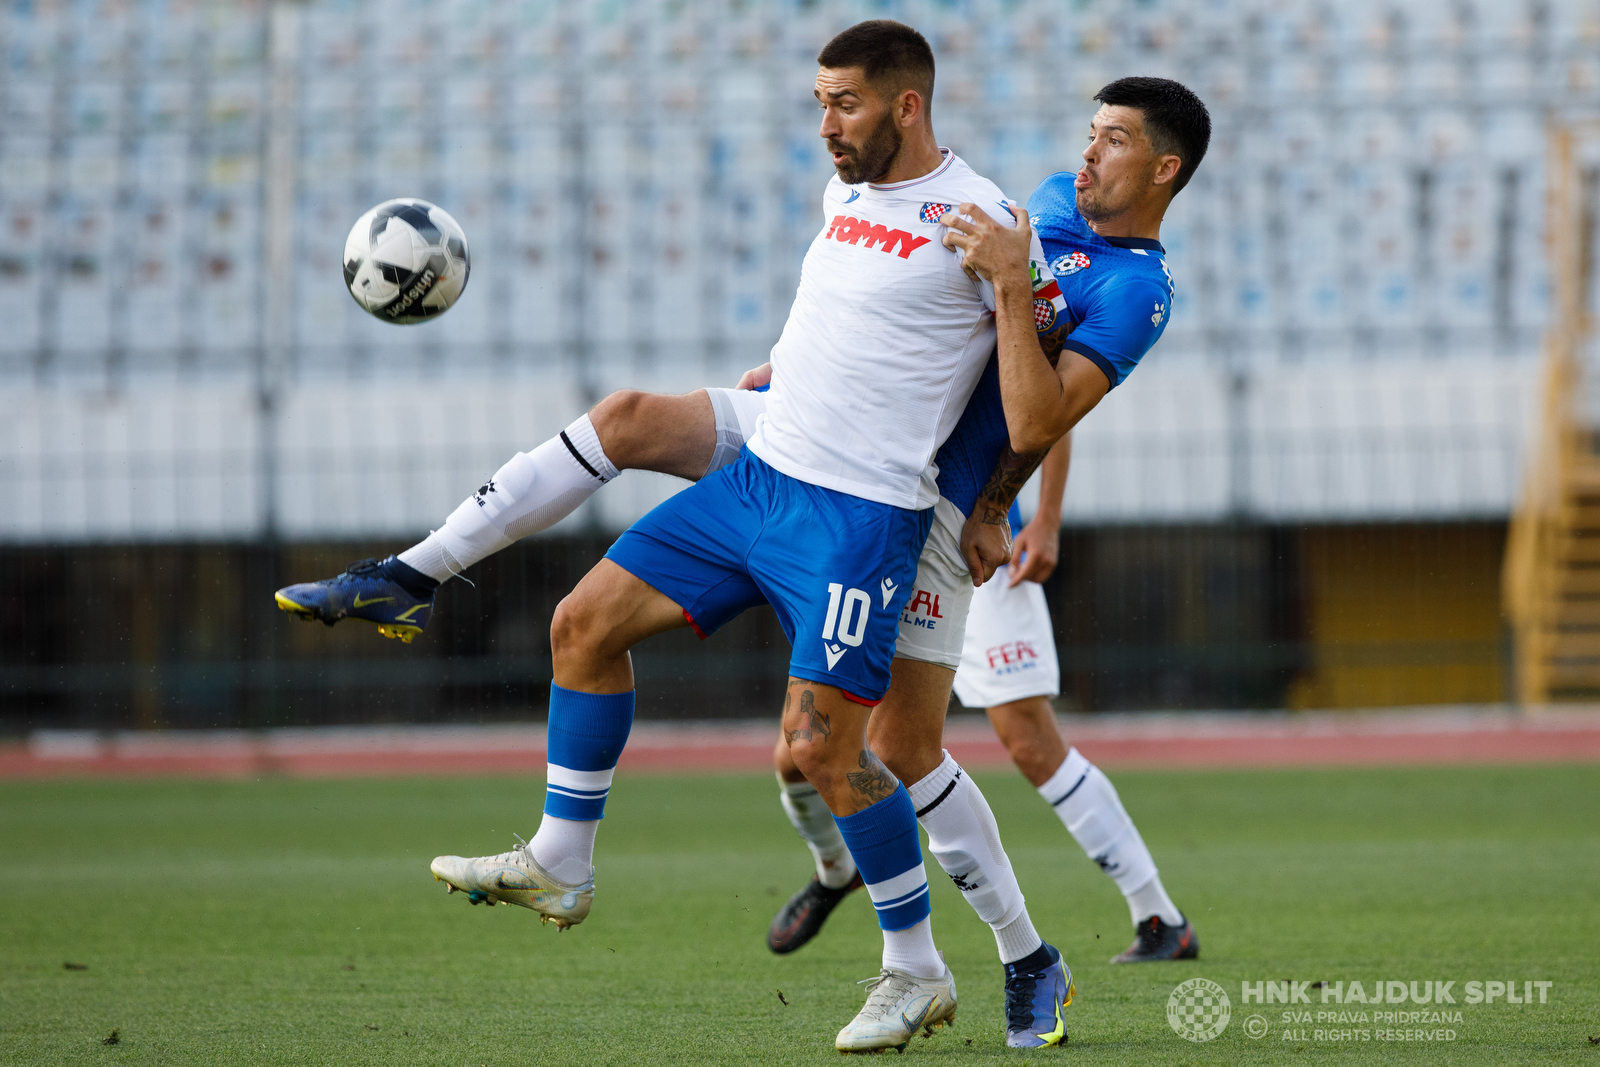 Trening utakmica: Hajduk - Široki Brijeg 1:1